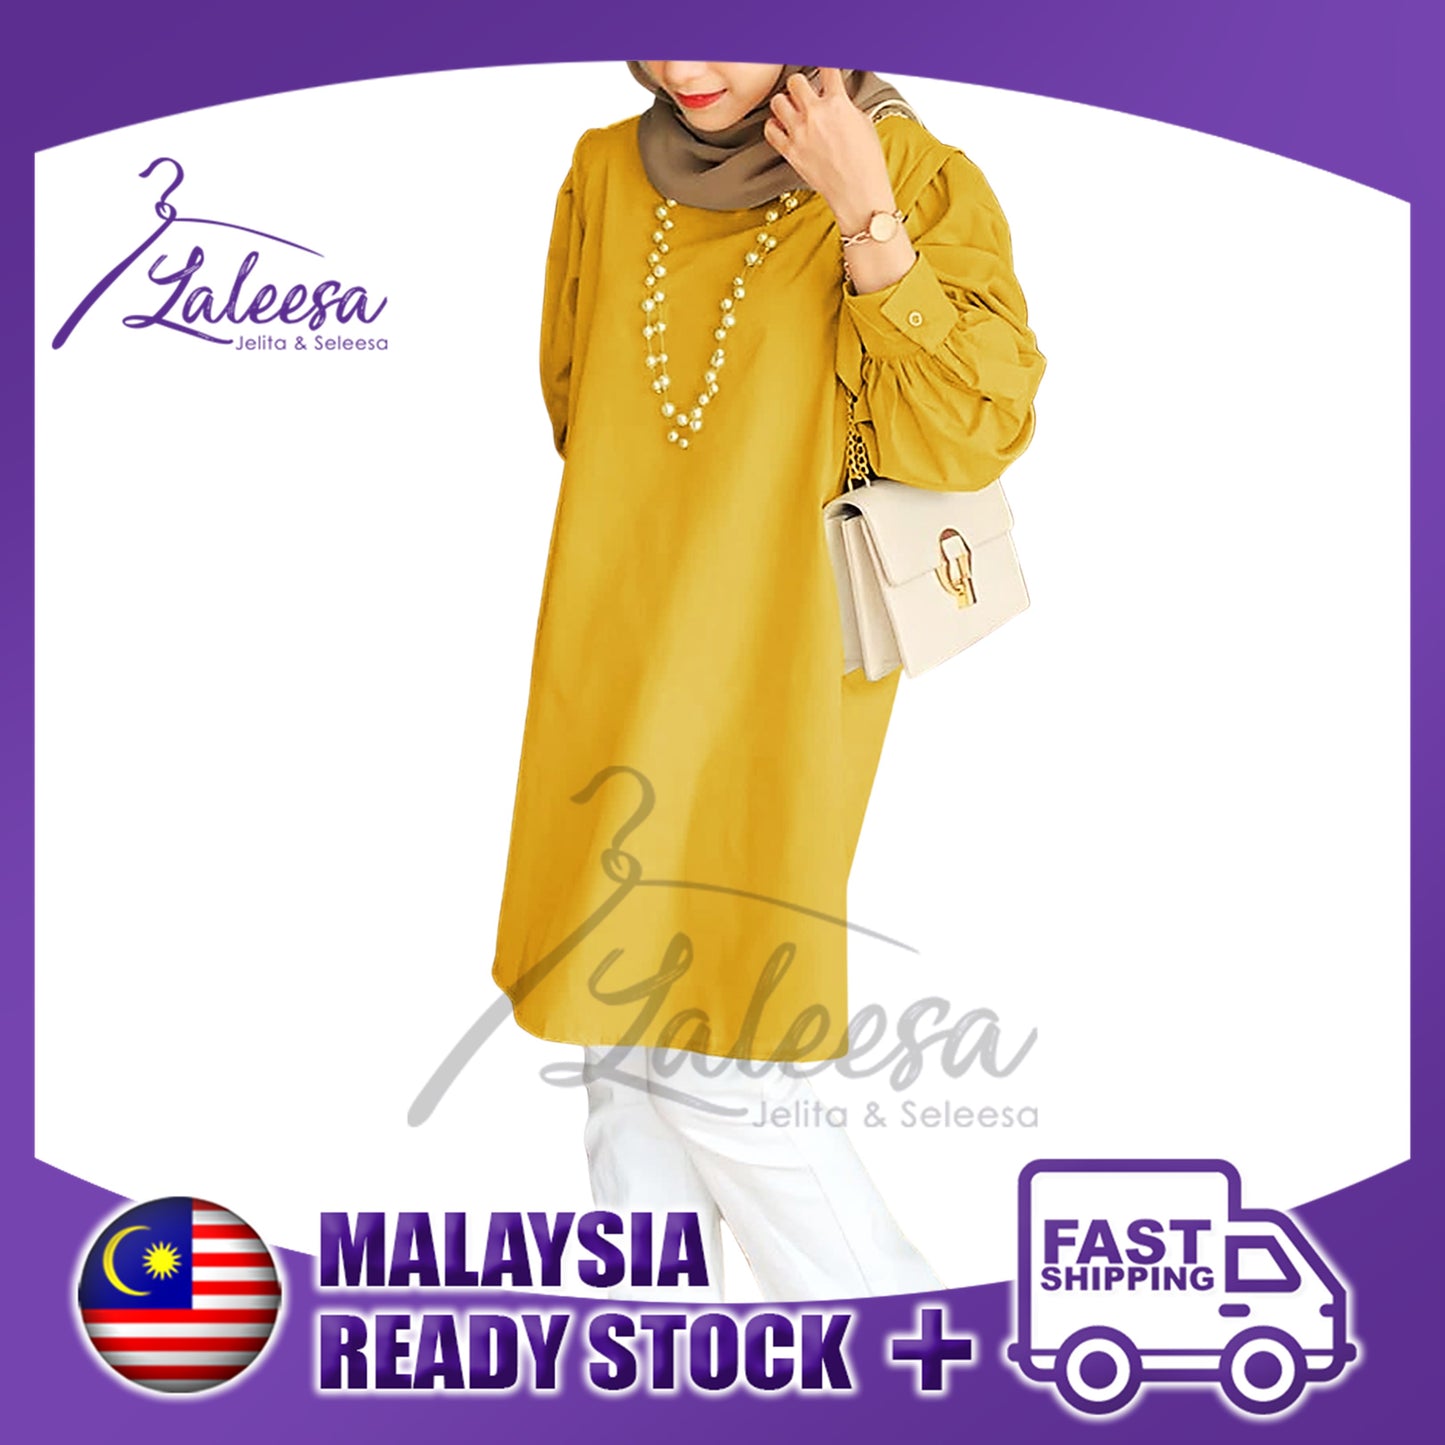 LALEESA TB445495 BLOUSE QANIAH Plain Color Tie Collar Blouse Muslimah Blouse Women Blouse Baju Muslimah Baju Perempuan